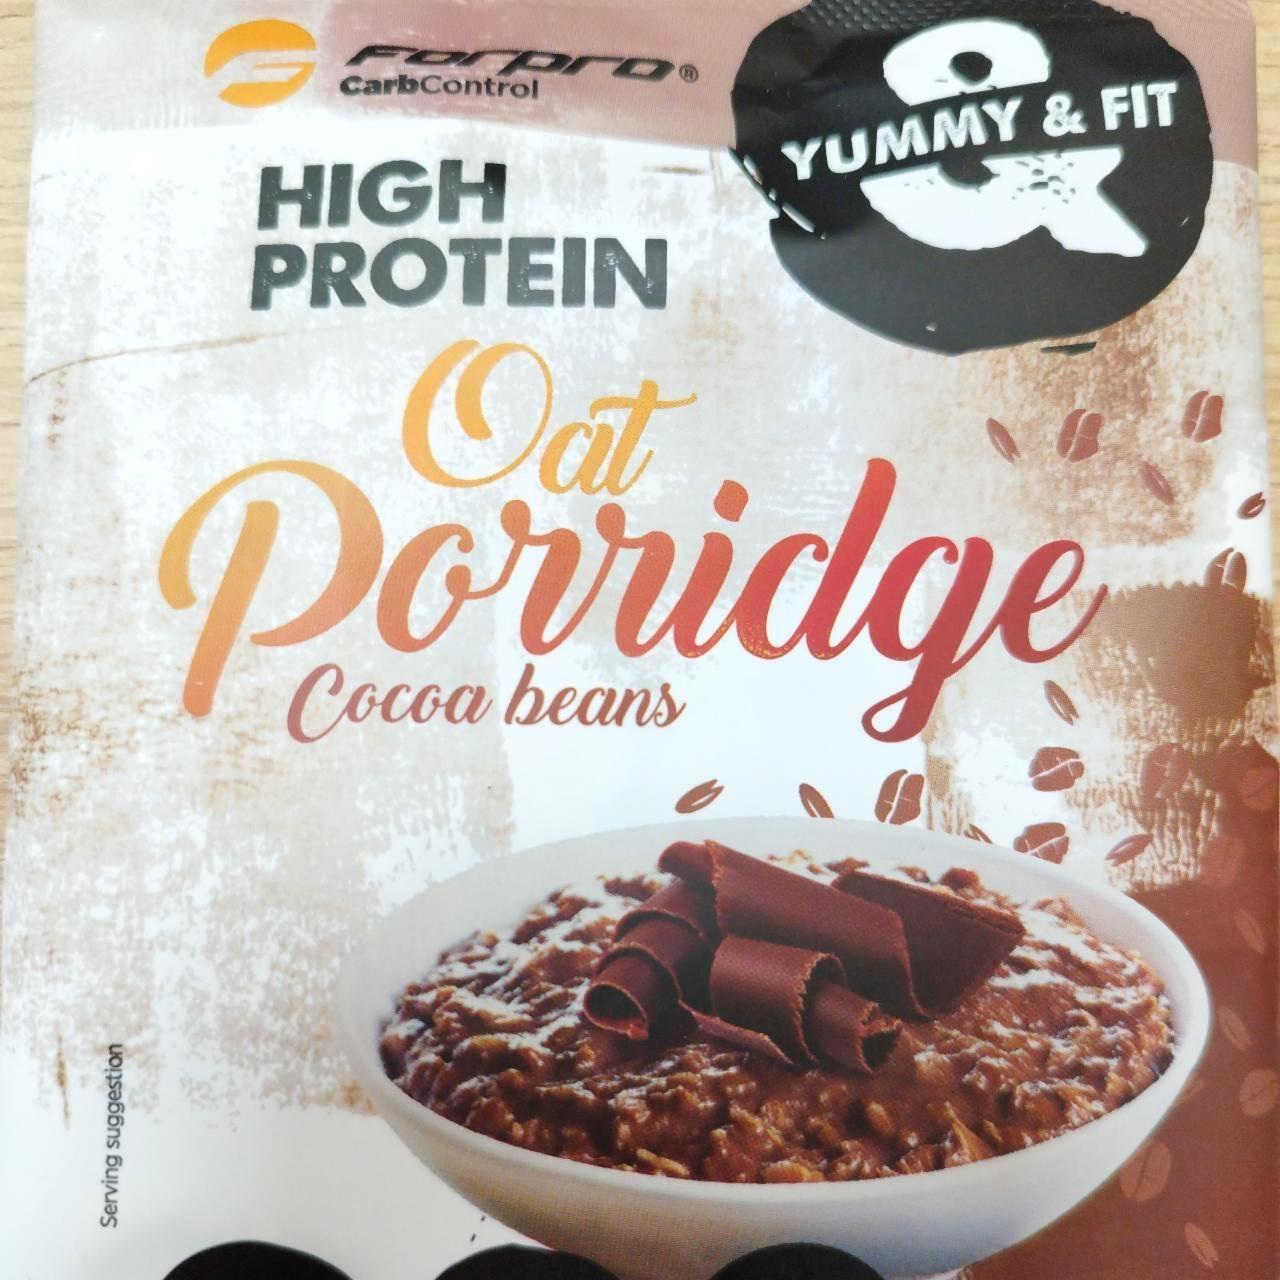 Képek - High protein Oat porridge Cocoa beans ForPro